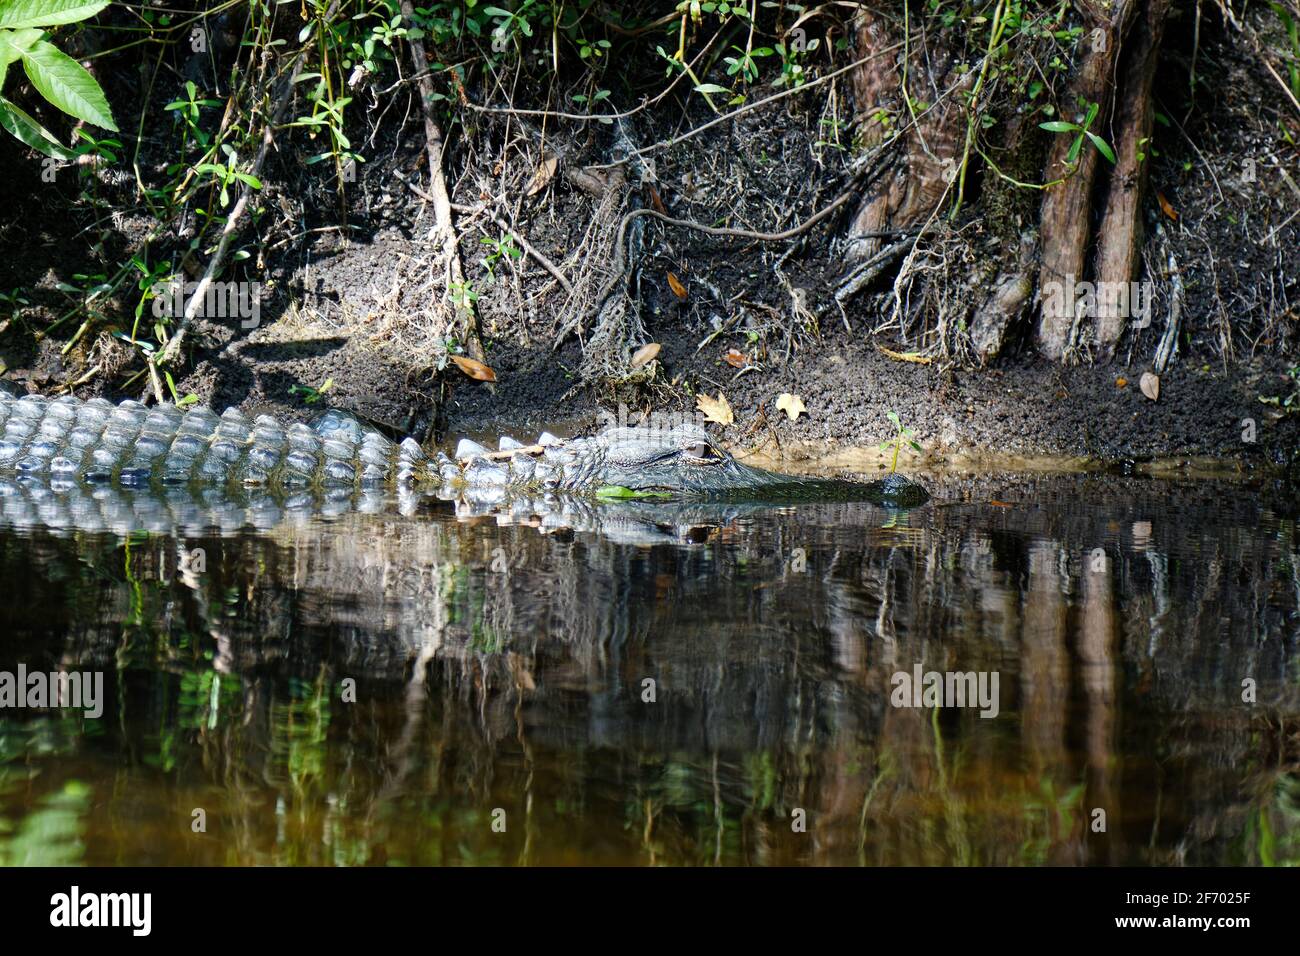 American alligator, water's edge, wildlife, dangerous animal, nature, reptile, reflections,Alligator mississippiensis, Florida, Hillsborough River Sta Stock Photo